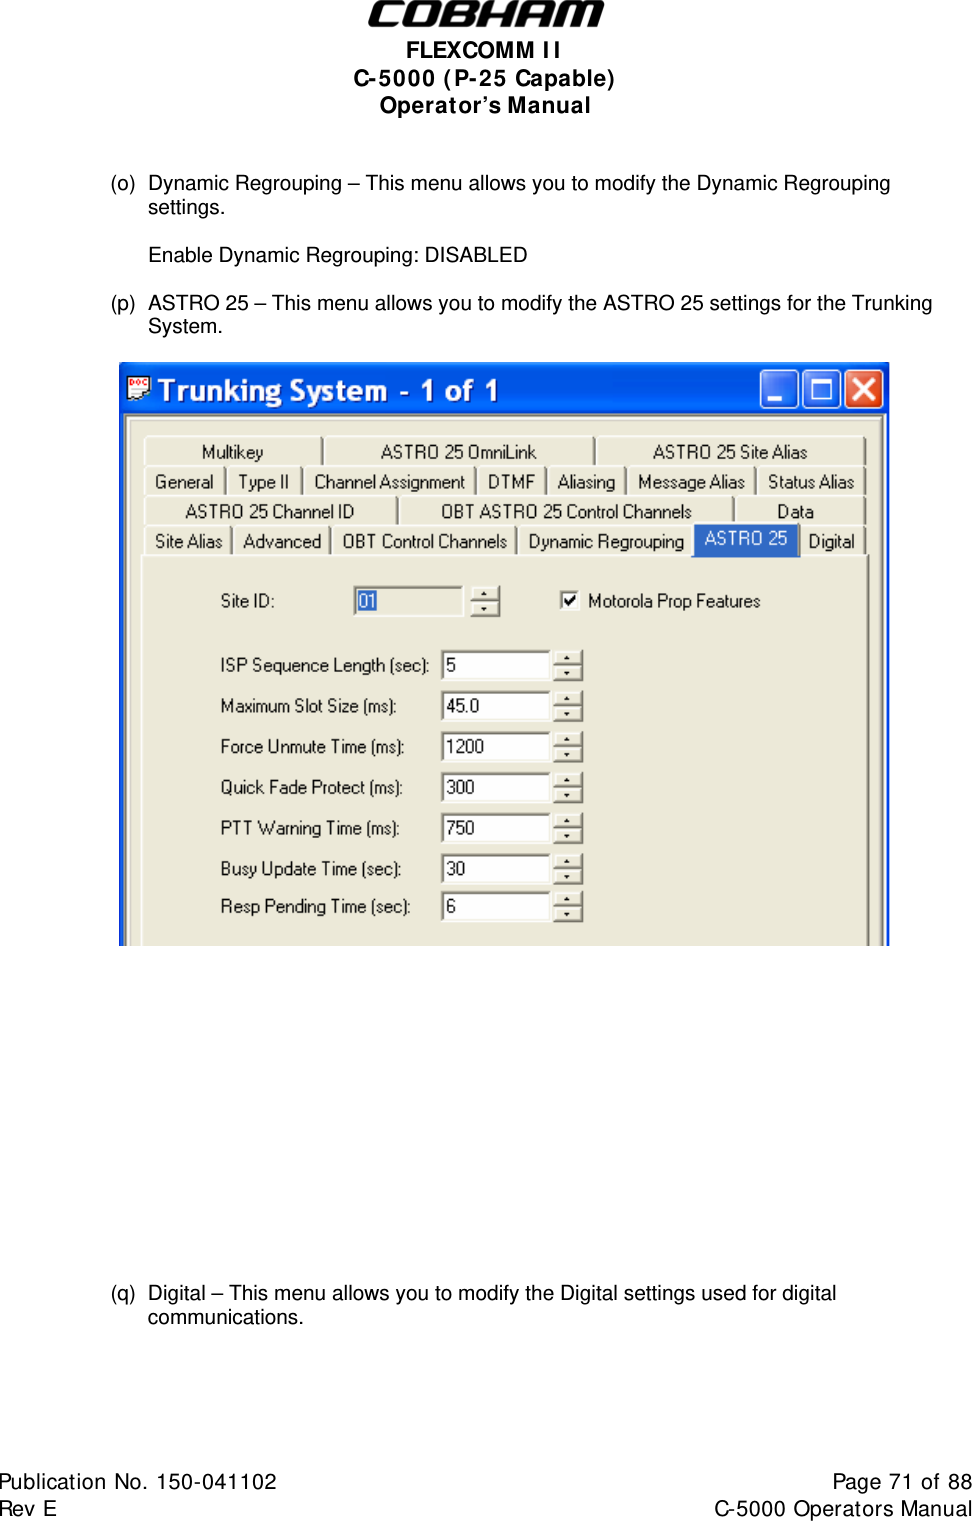  FLEXCOMM I I  C-5000 ( P-25 Capable)  Operator’s Manual   (o)  Dynamic Regrouping – This menu allows you to modify the Dynamic Regrouping settings.    Enable Dynamic Regrouping: DISABLED  (p)  ASTRO 25 – This menu allows you to modify the ASTRO 25 settings for the Trunking System.                    (q)  Digital – This menu allows you to modify the Digital settings used for digital communications.  Publication No. 150-041102  Page 71 of 88  Rev E  C-5000 Operators Manual    